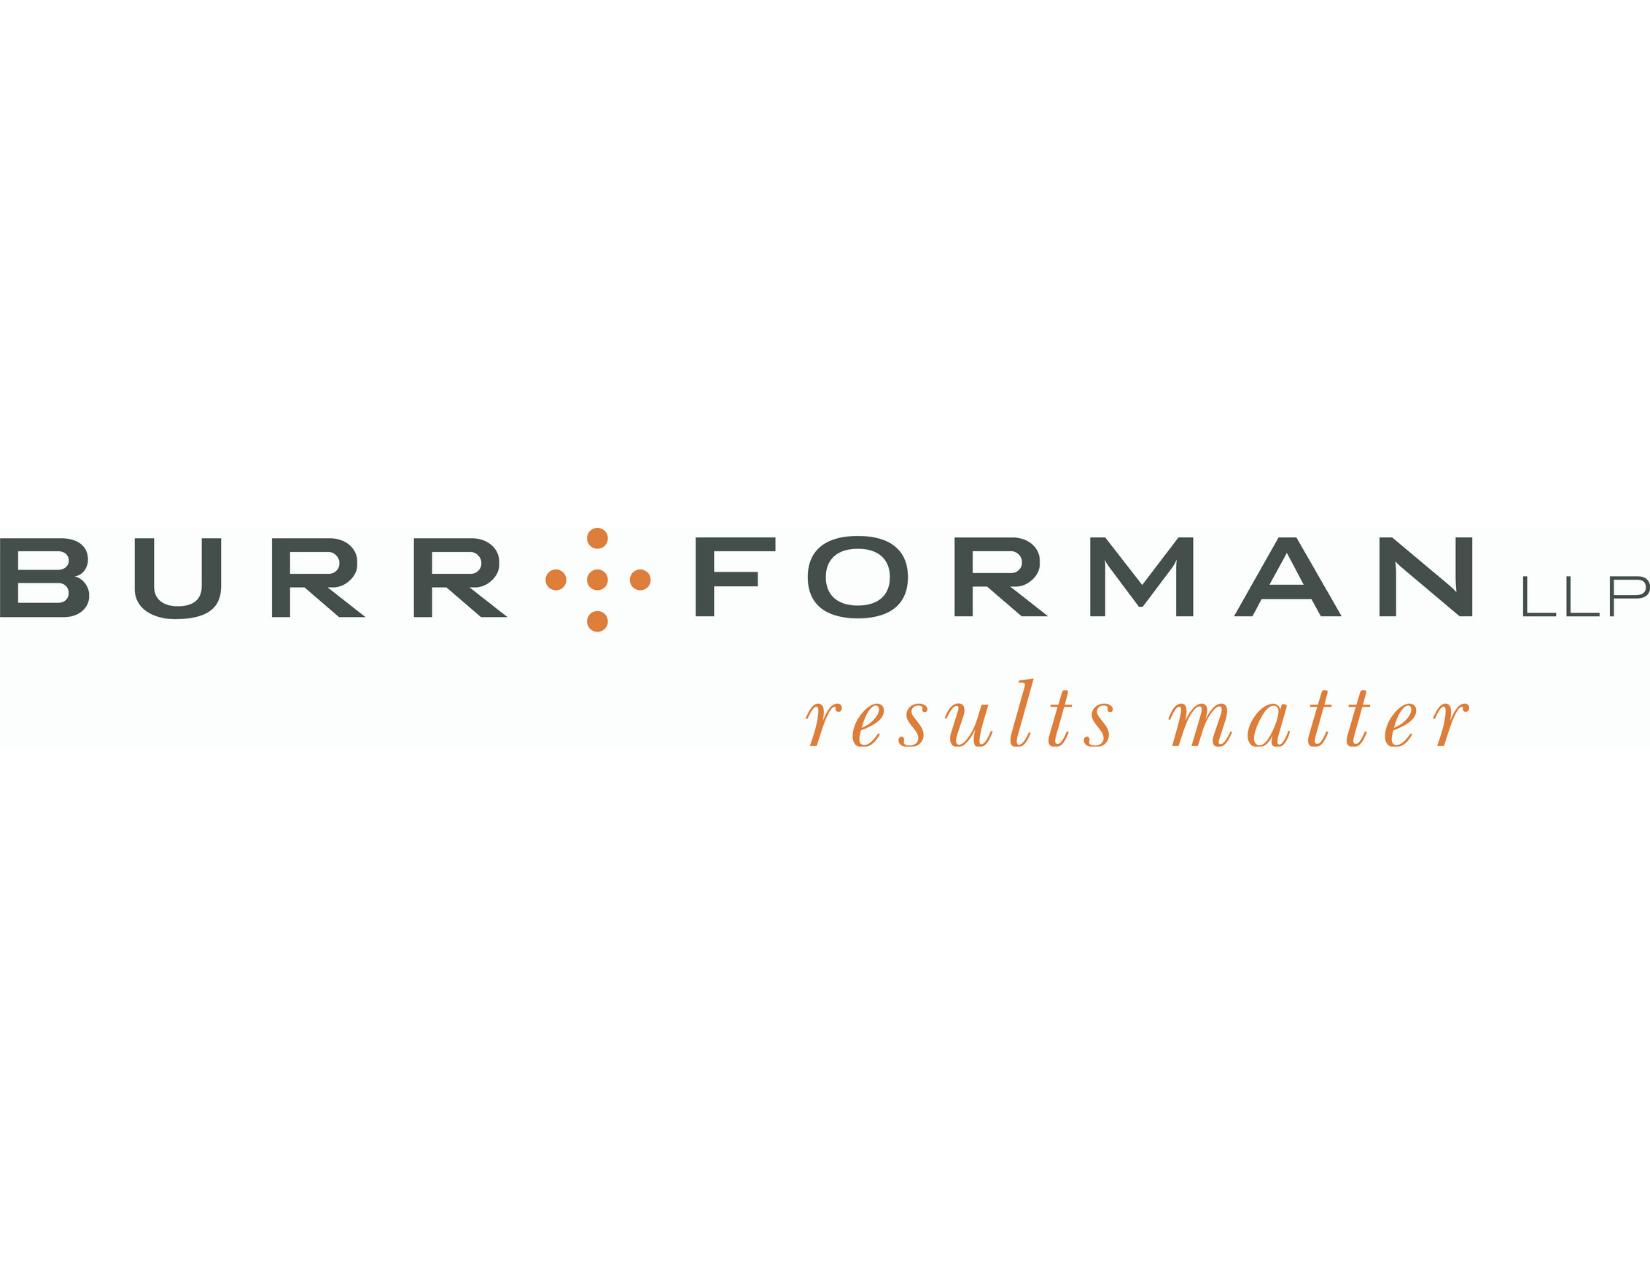 Burr & Forman